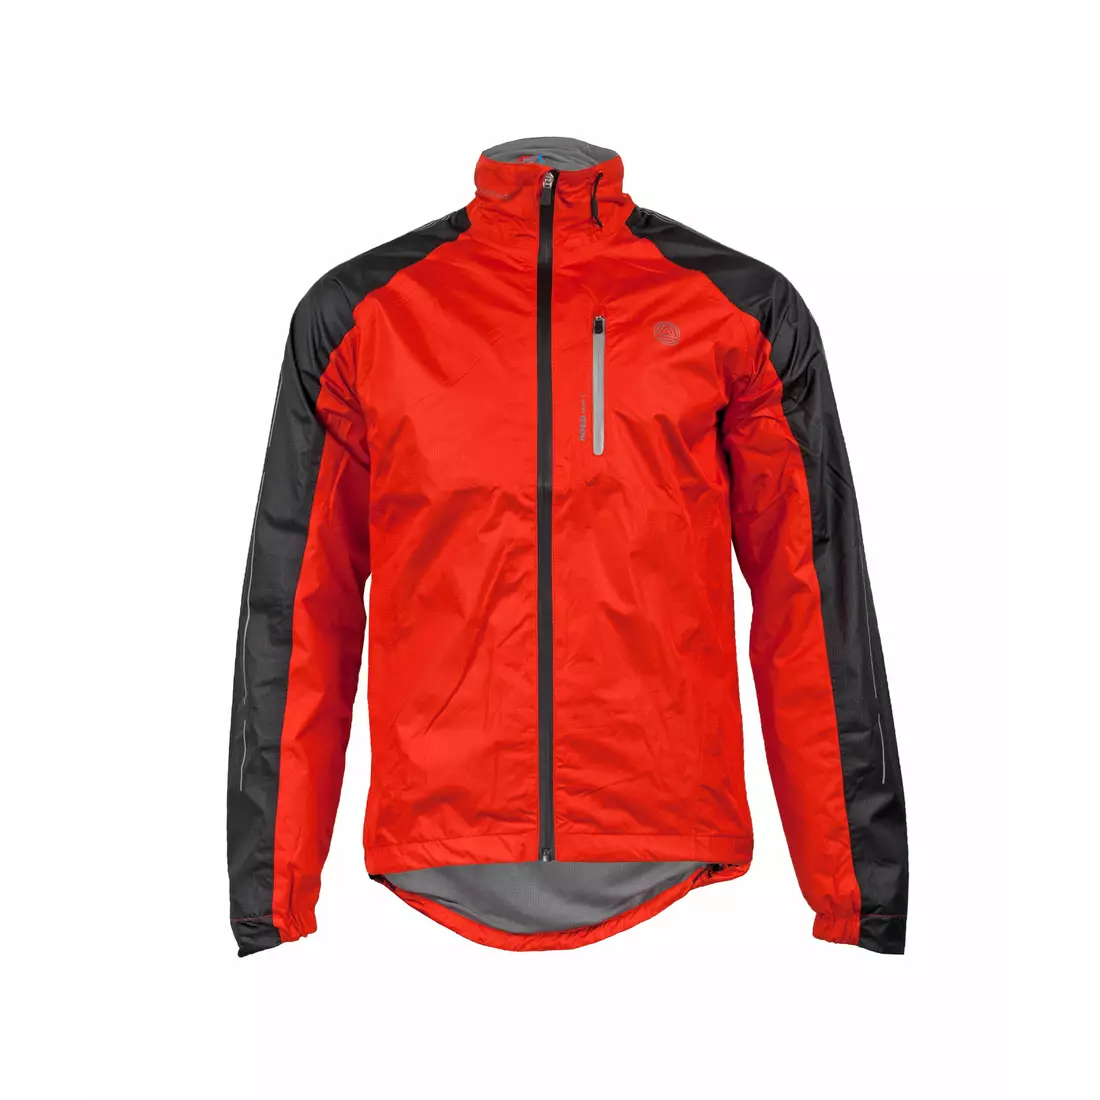 DARE2B cycling jacket, rainproof CALIBER JACKET DMW095, red